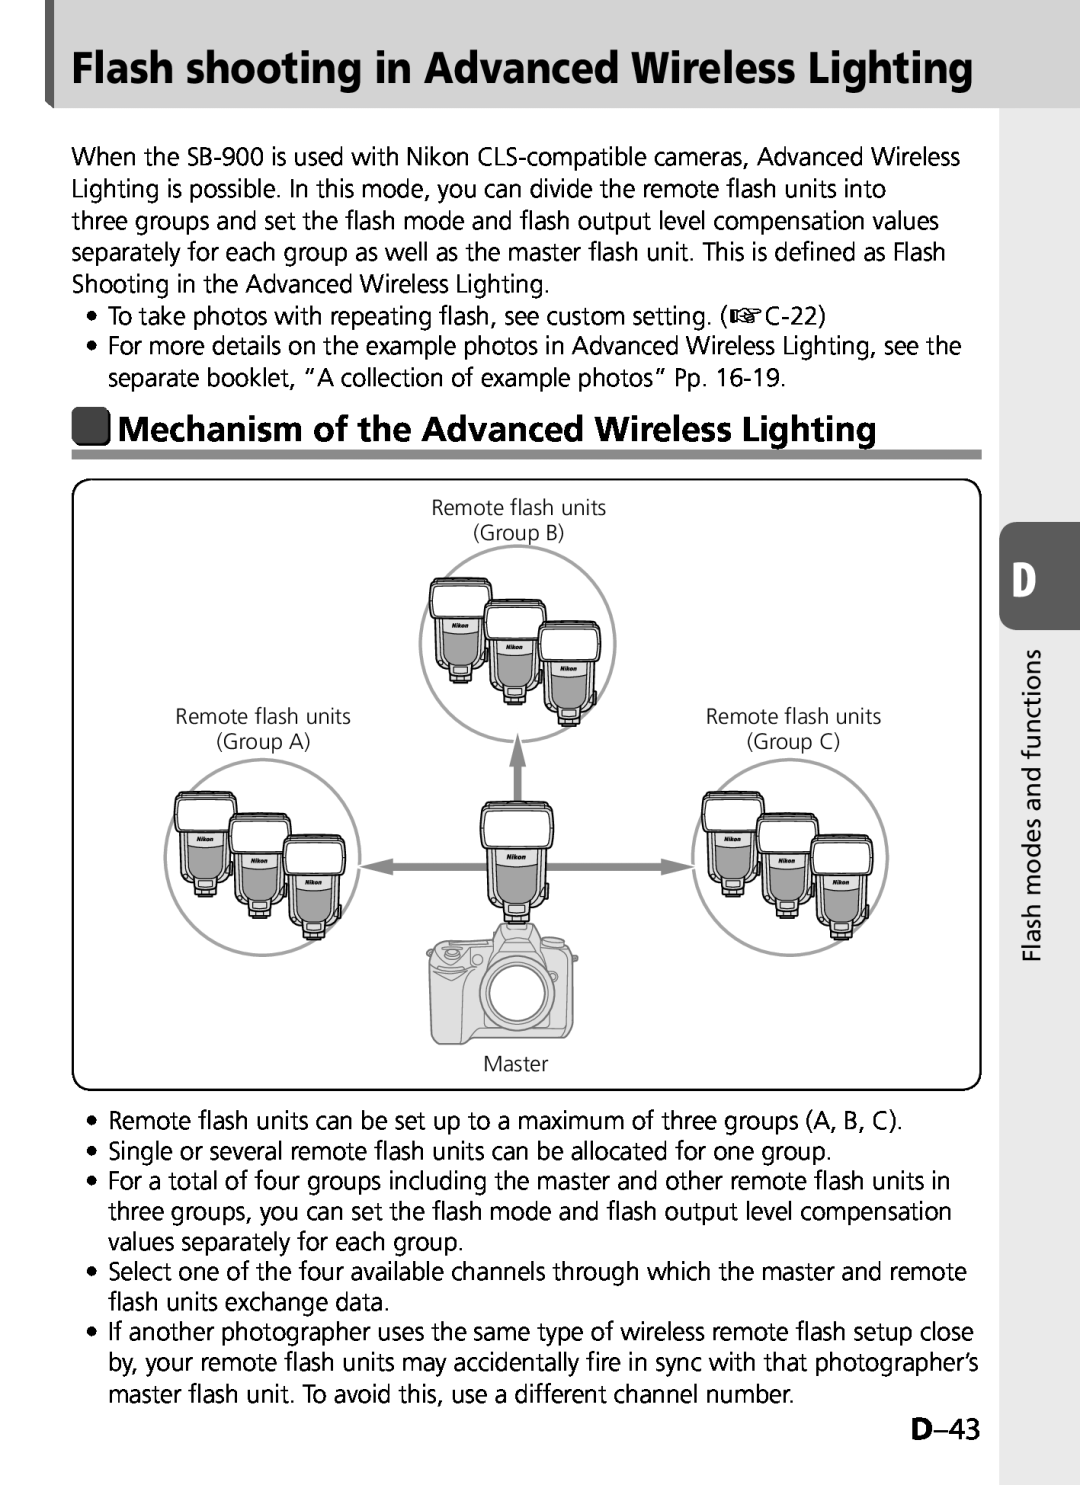 Univex SB-900 user manual Flash shooting in Advanced Wireless Lighting, Mechanism of the Advanced Wireless Lighting, D-43 